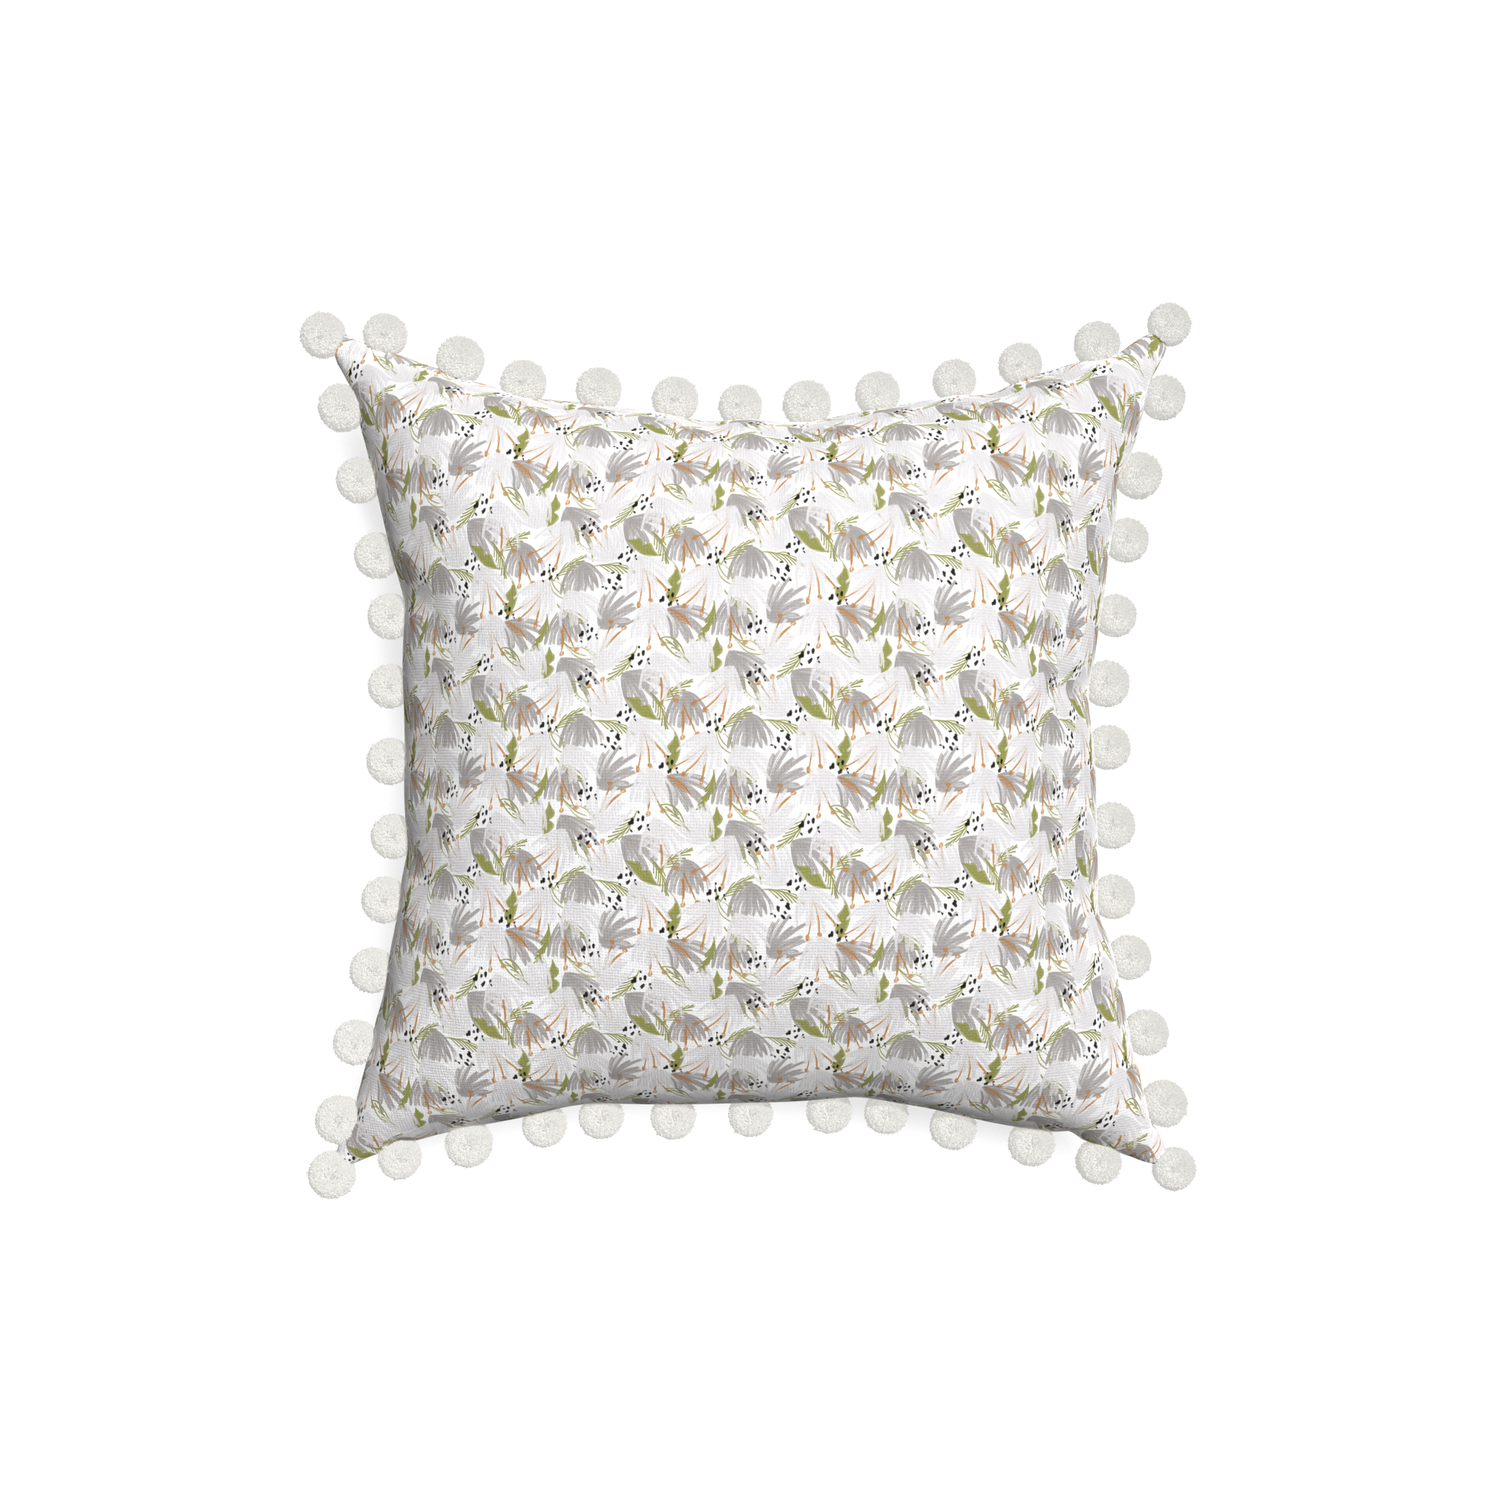 18-square eden grey custom pillow with snow pom pom on white background